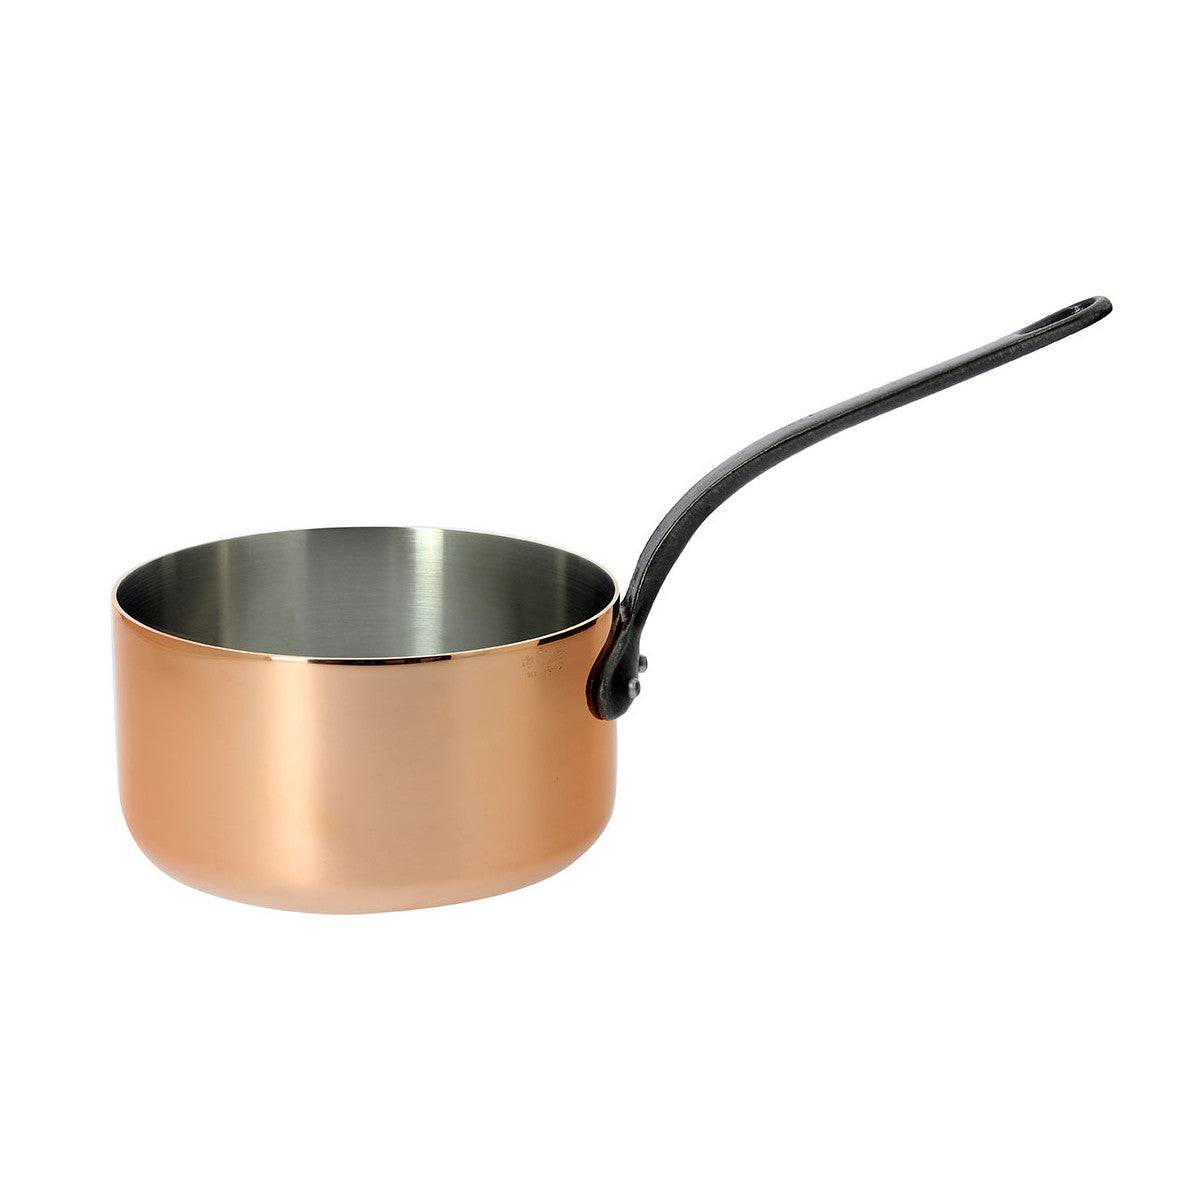 de Buyer Prima Matera Tradition Copper Saucepan With Cast Iron Handle, 1.3-Quart - Kitchen Universe